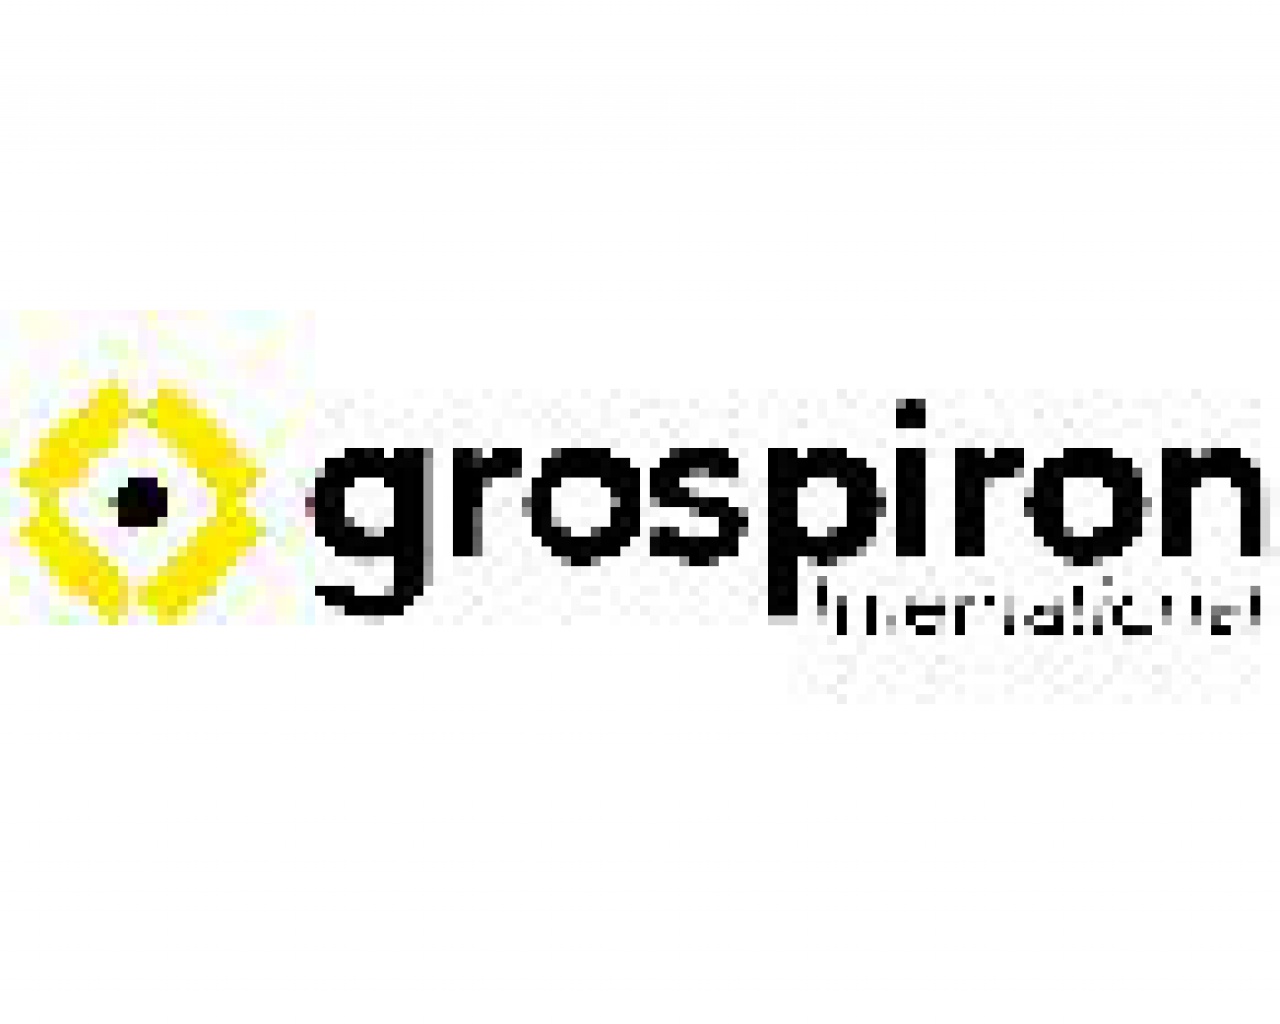 Grospiron